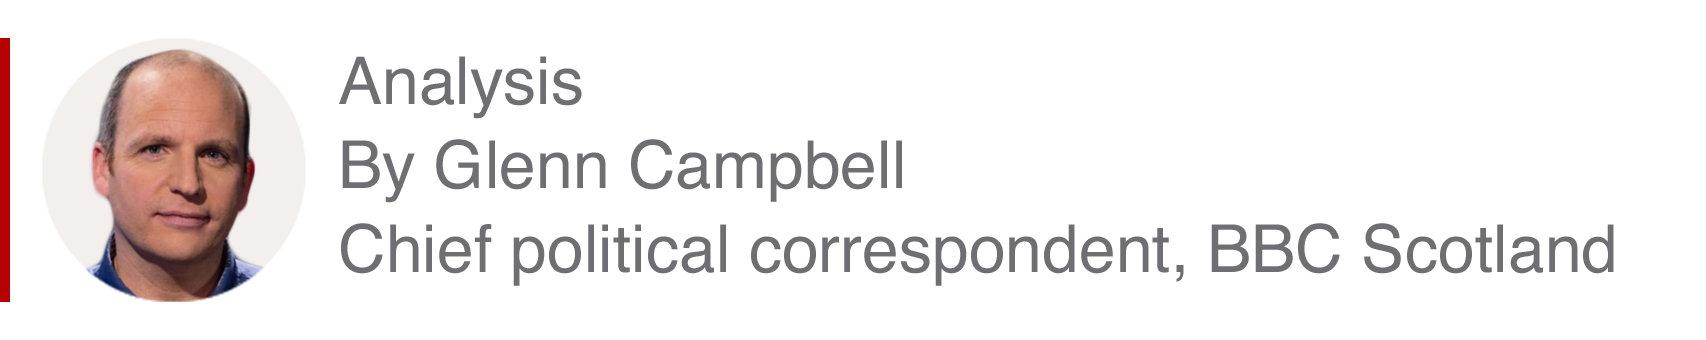 Analysis box by Glenn Campbell, Chief political correspondent, BBC Scotland